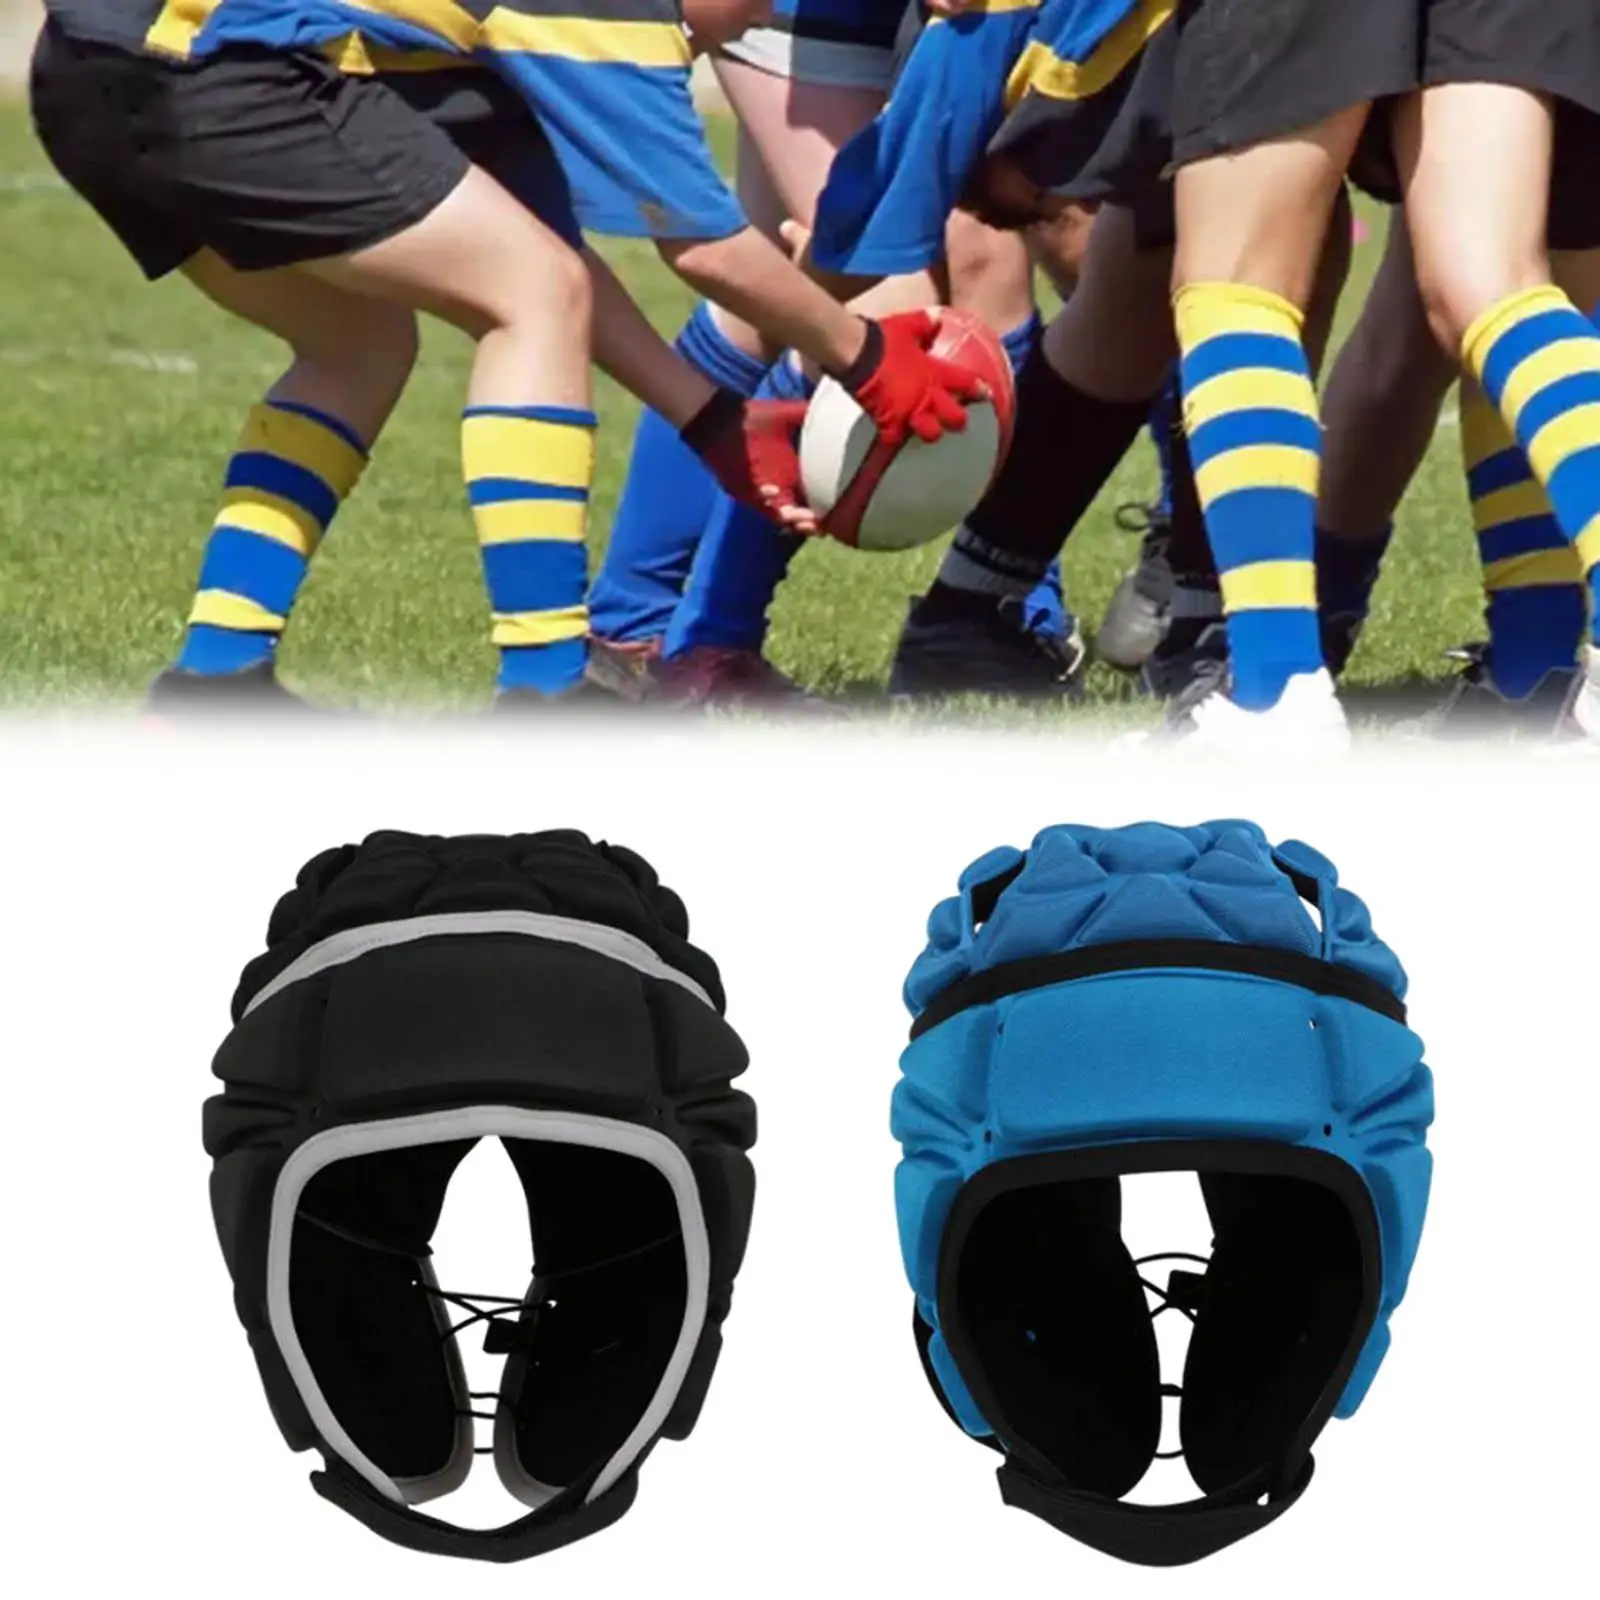 Rugby Headguard Protector Guard Wrestling Helmet Head Gear Sponge Padded Ice Hockey Helmet for Baseball Skateboard Boxing